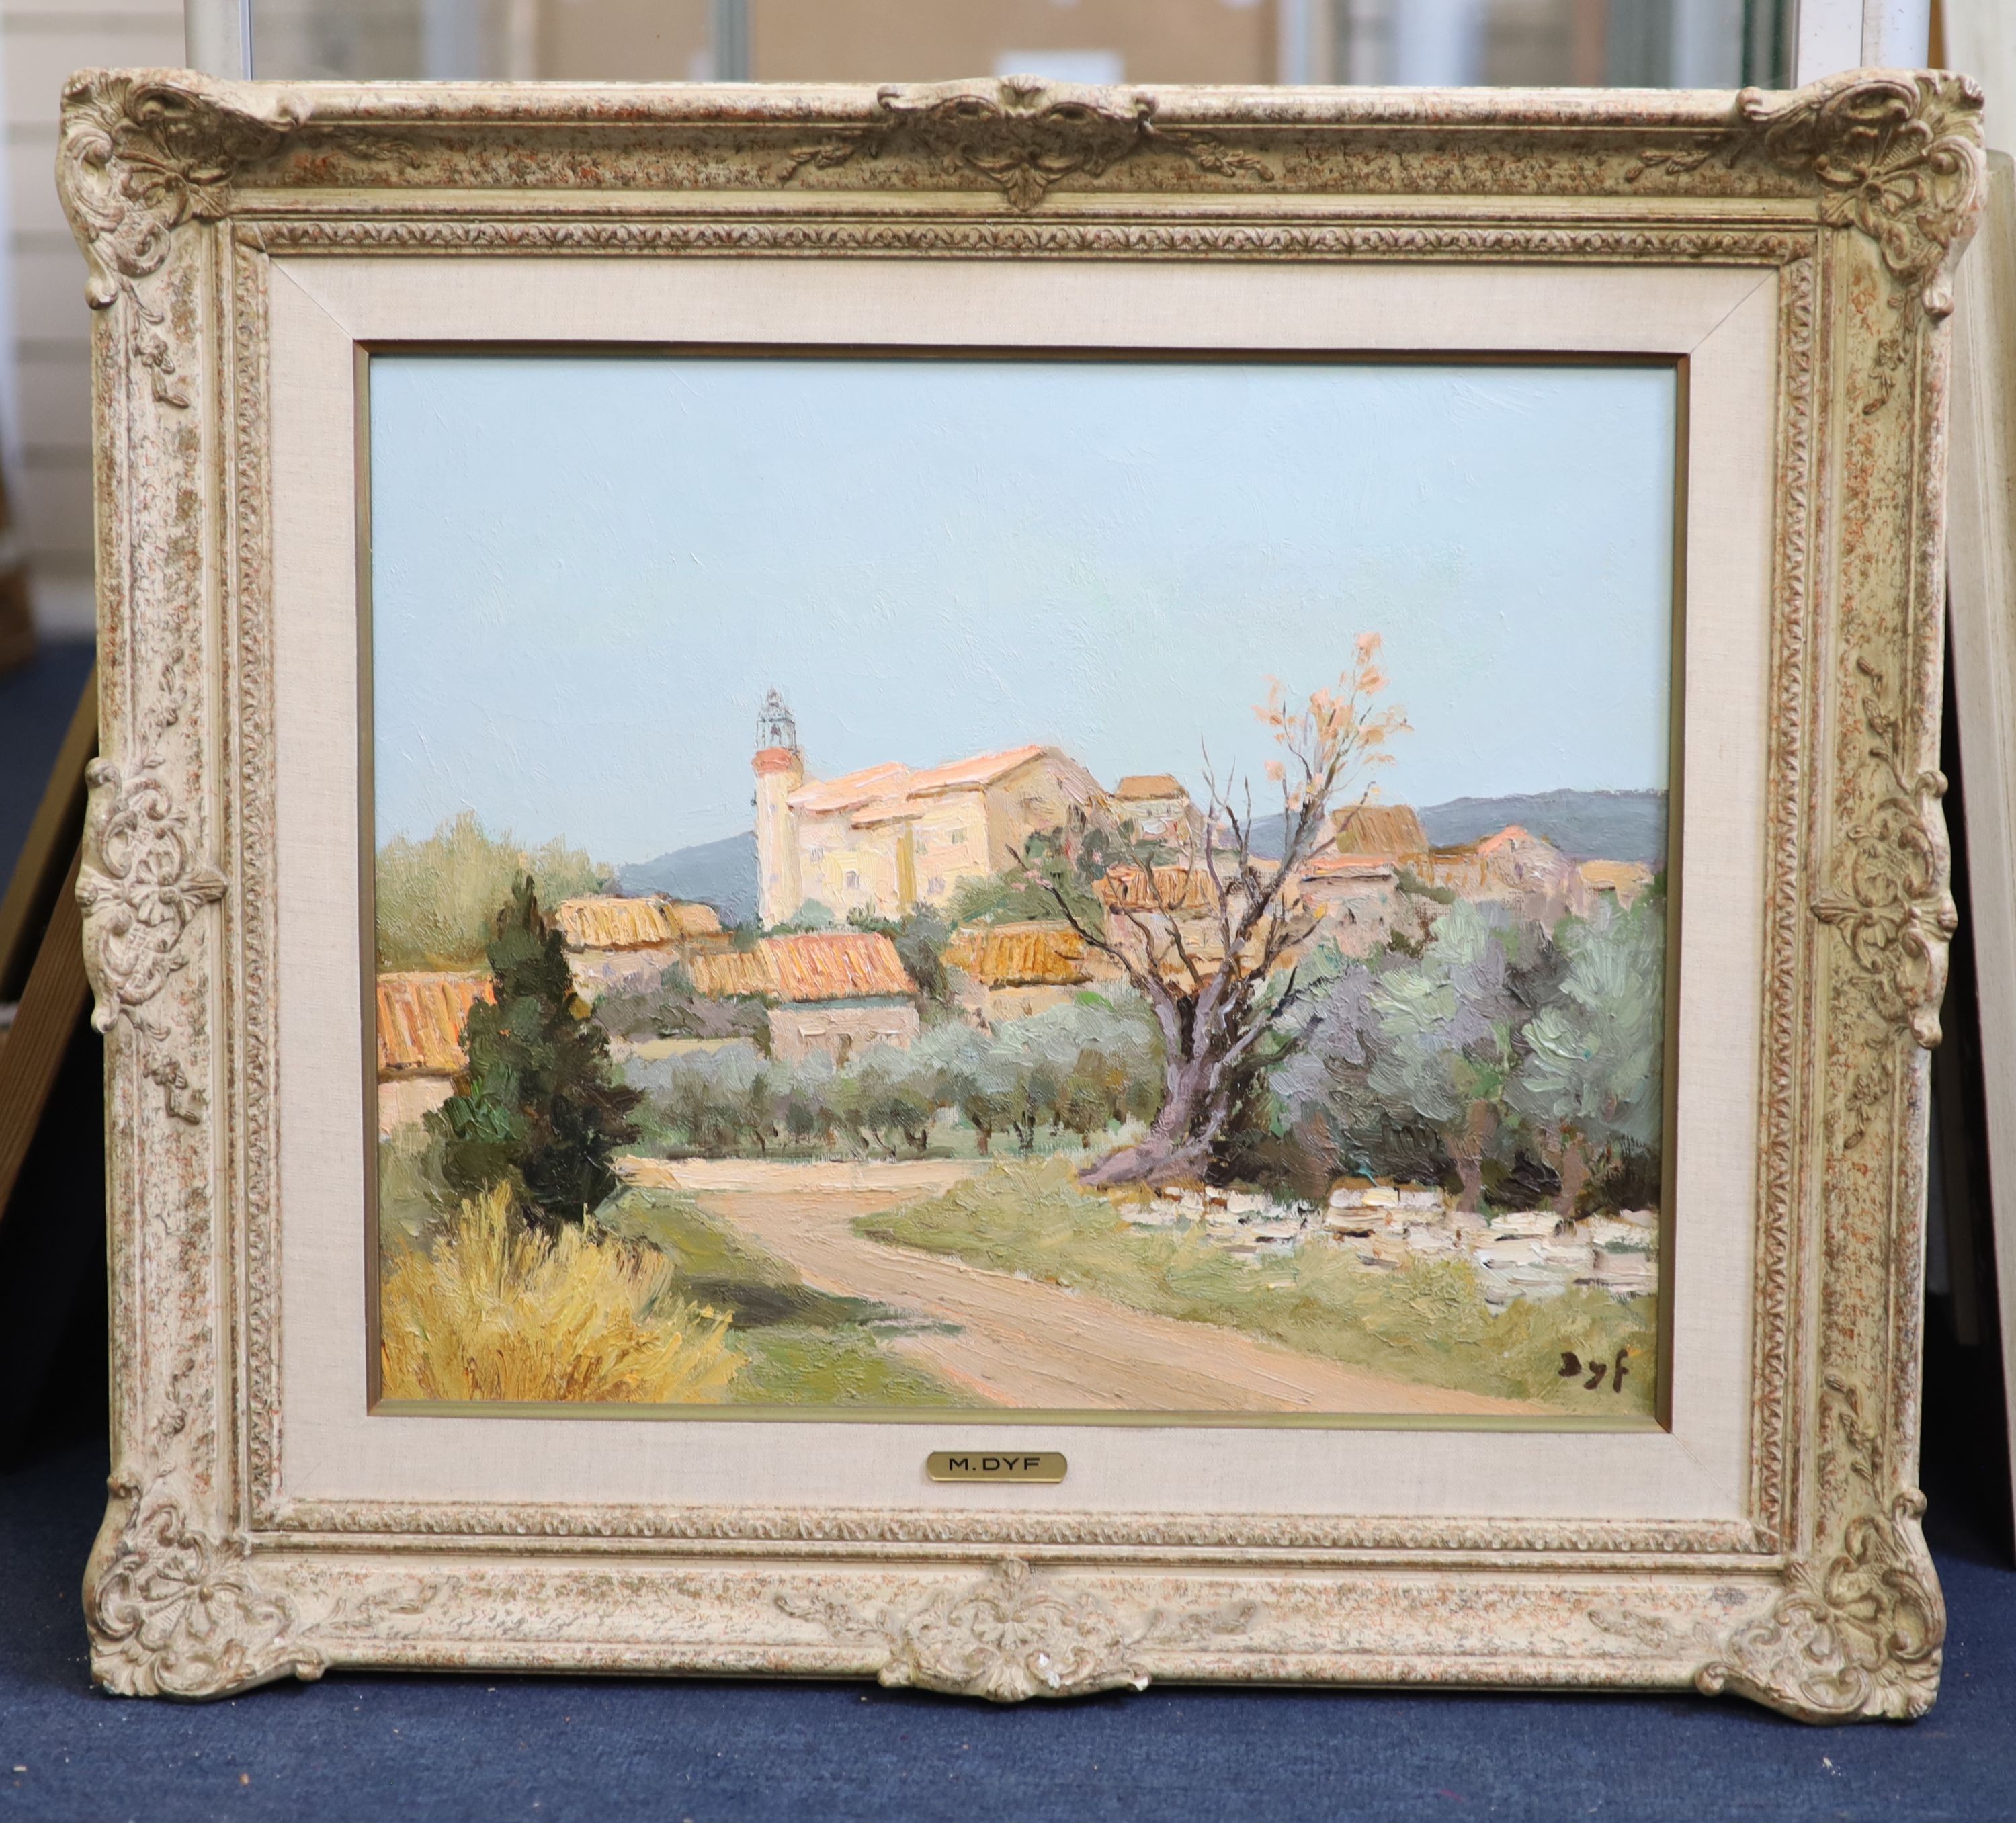 Marcel Dyf (French, 1899-1985), ‘Village de Provence’, oil on canvas, 38 x 46cm.